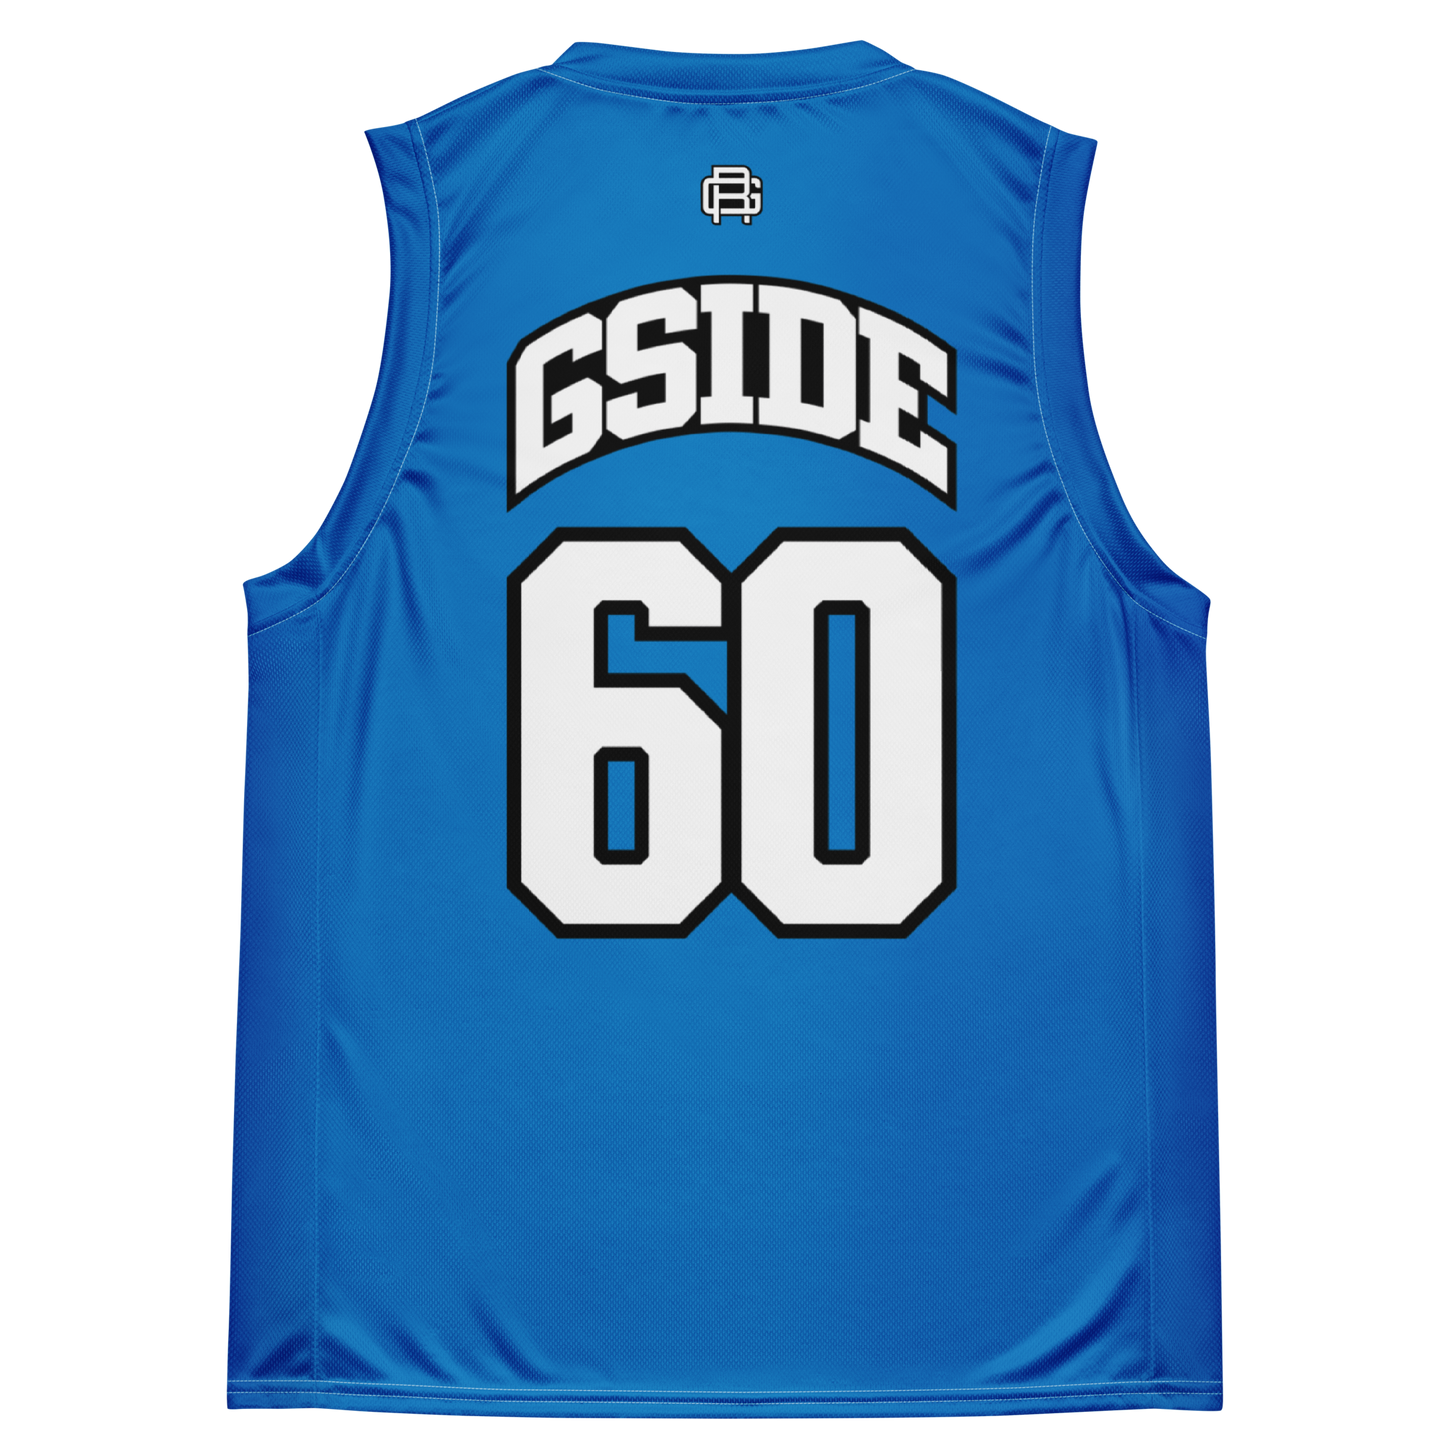 Gside Basketball Jersey - Ocean Blue